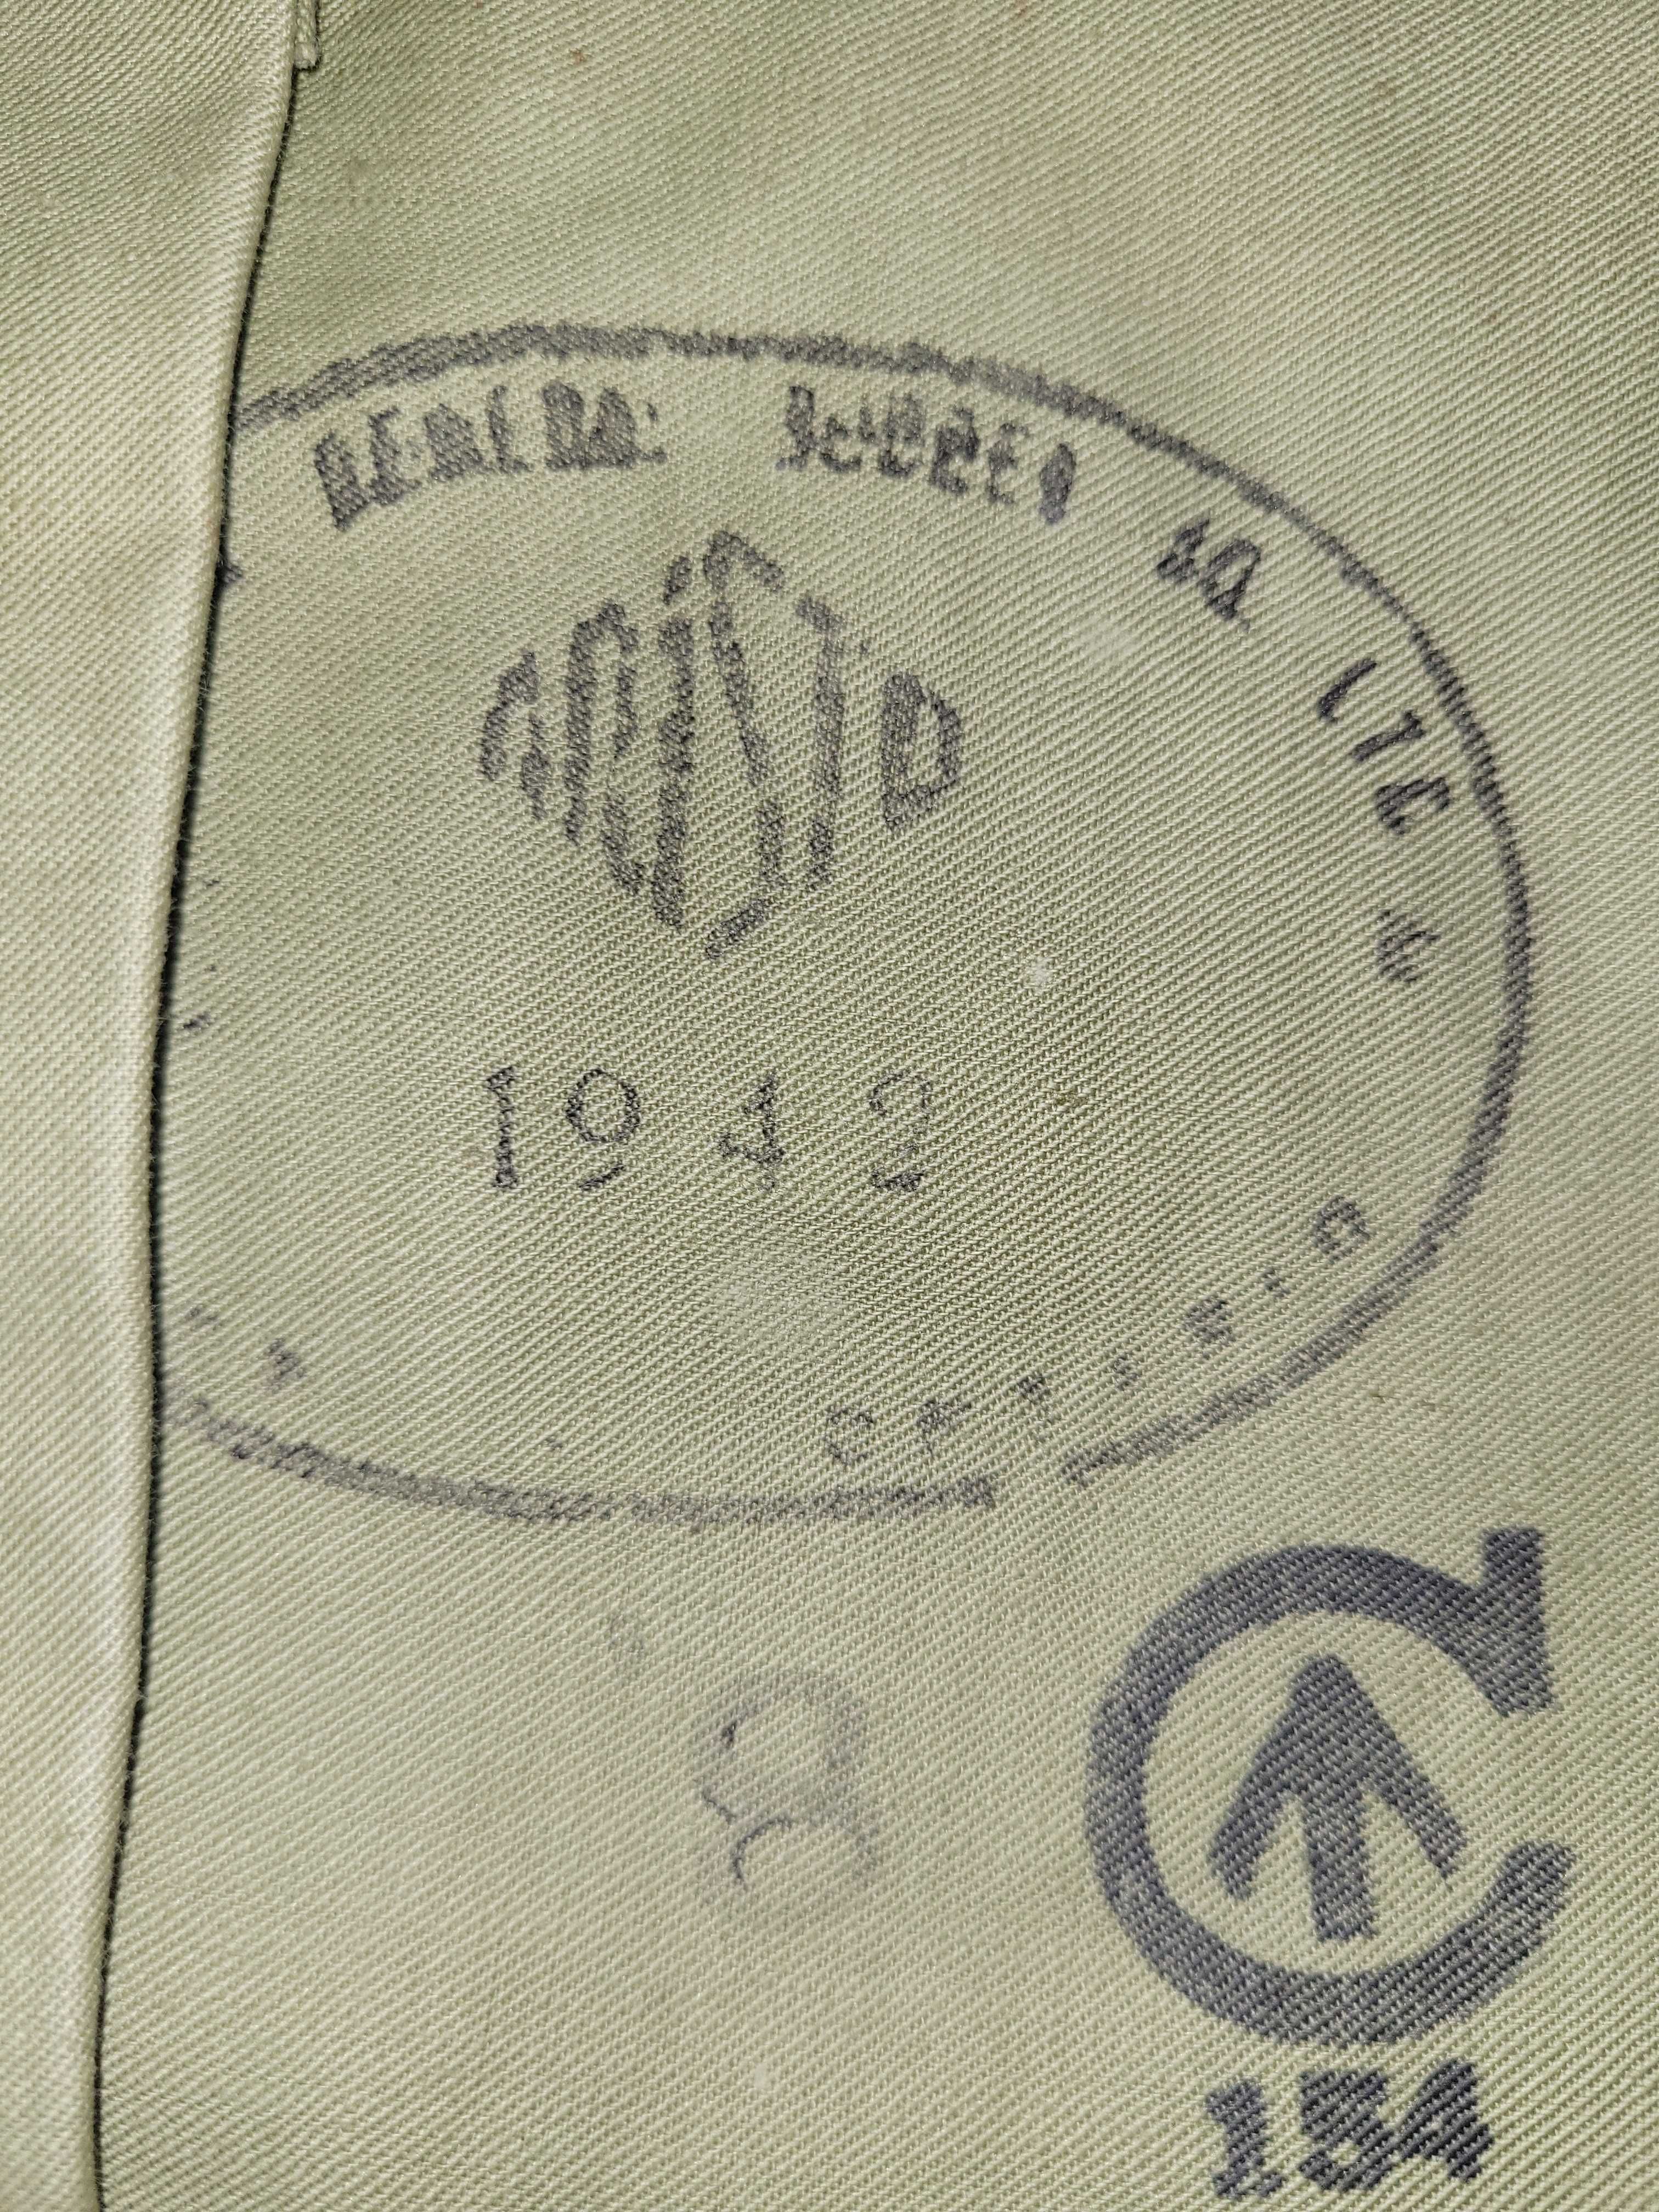 LEGGINGS MOTORCYCLISTS khaki no 2 Canadian General Rubber Co. Ltd 1942